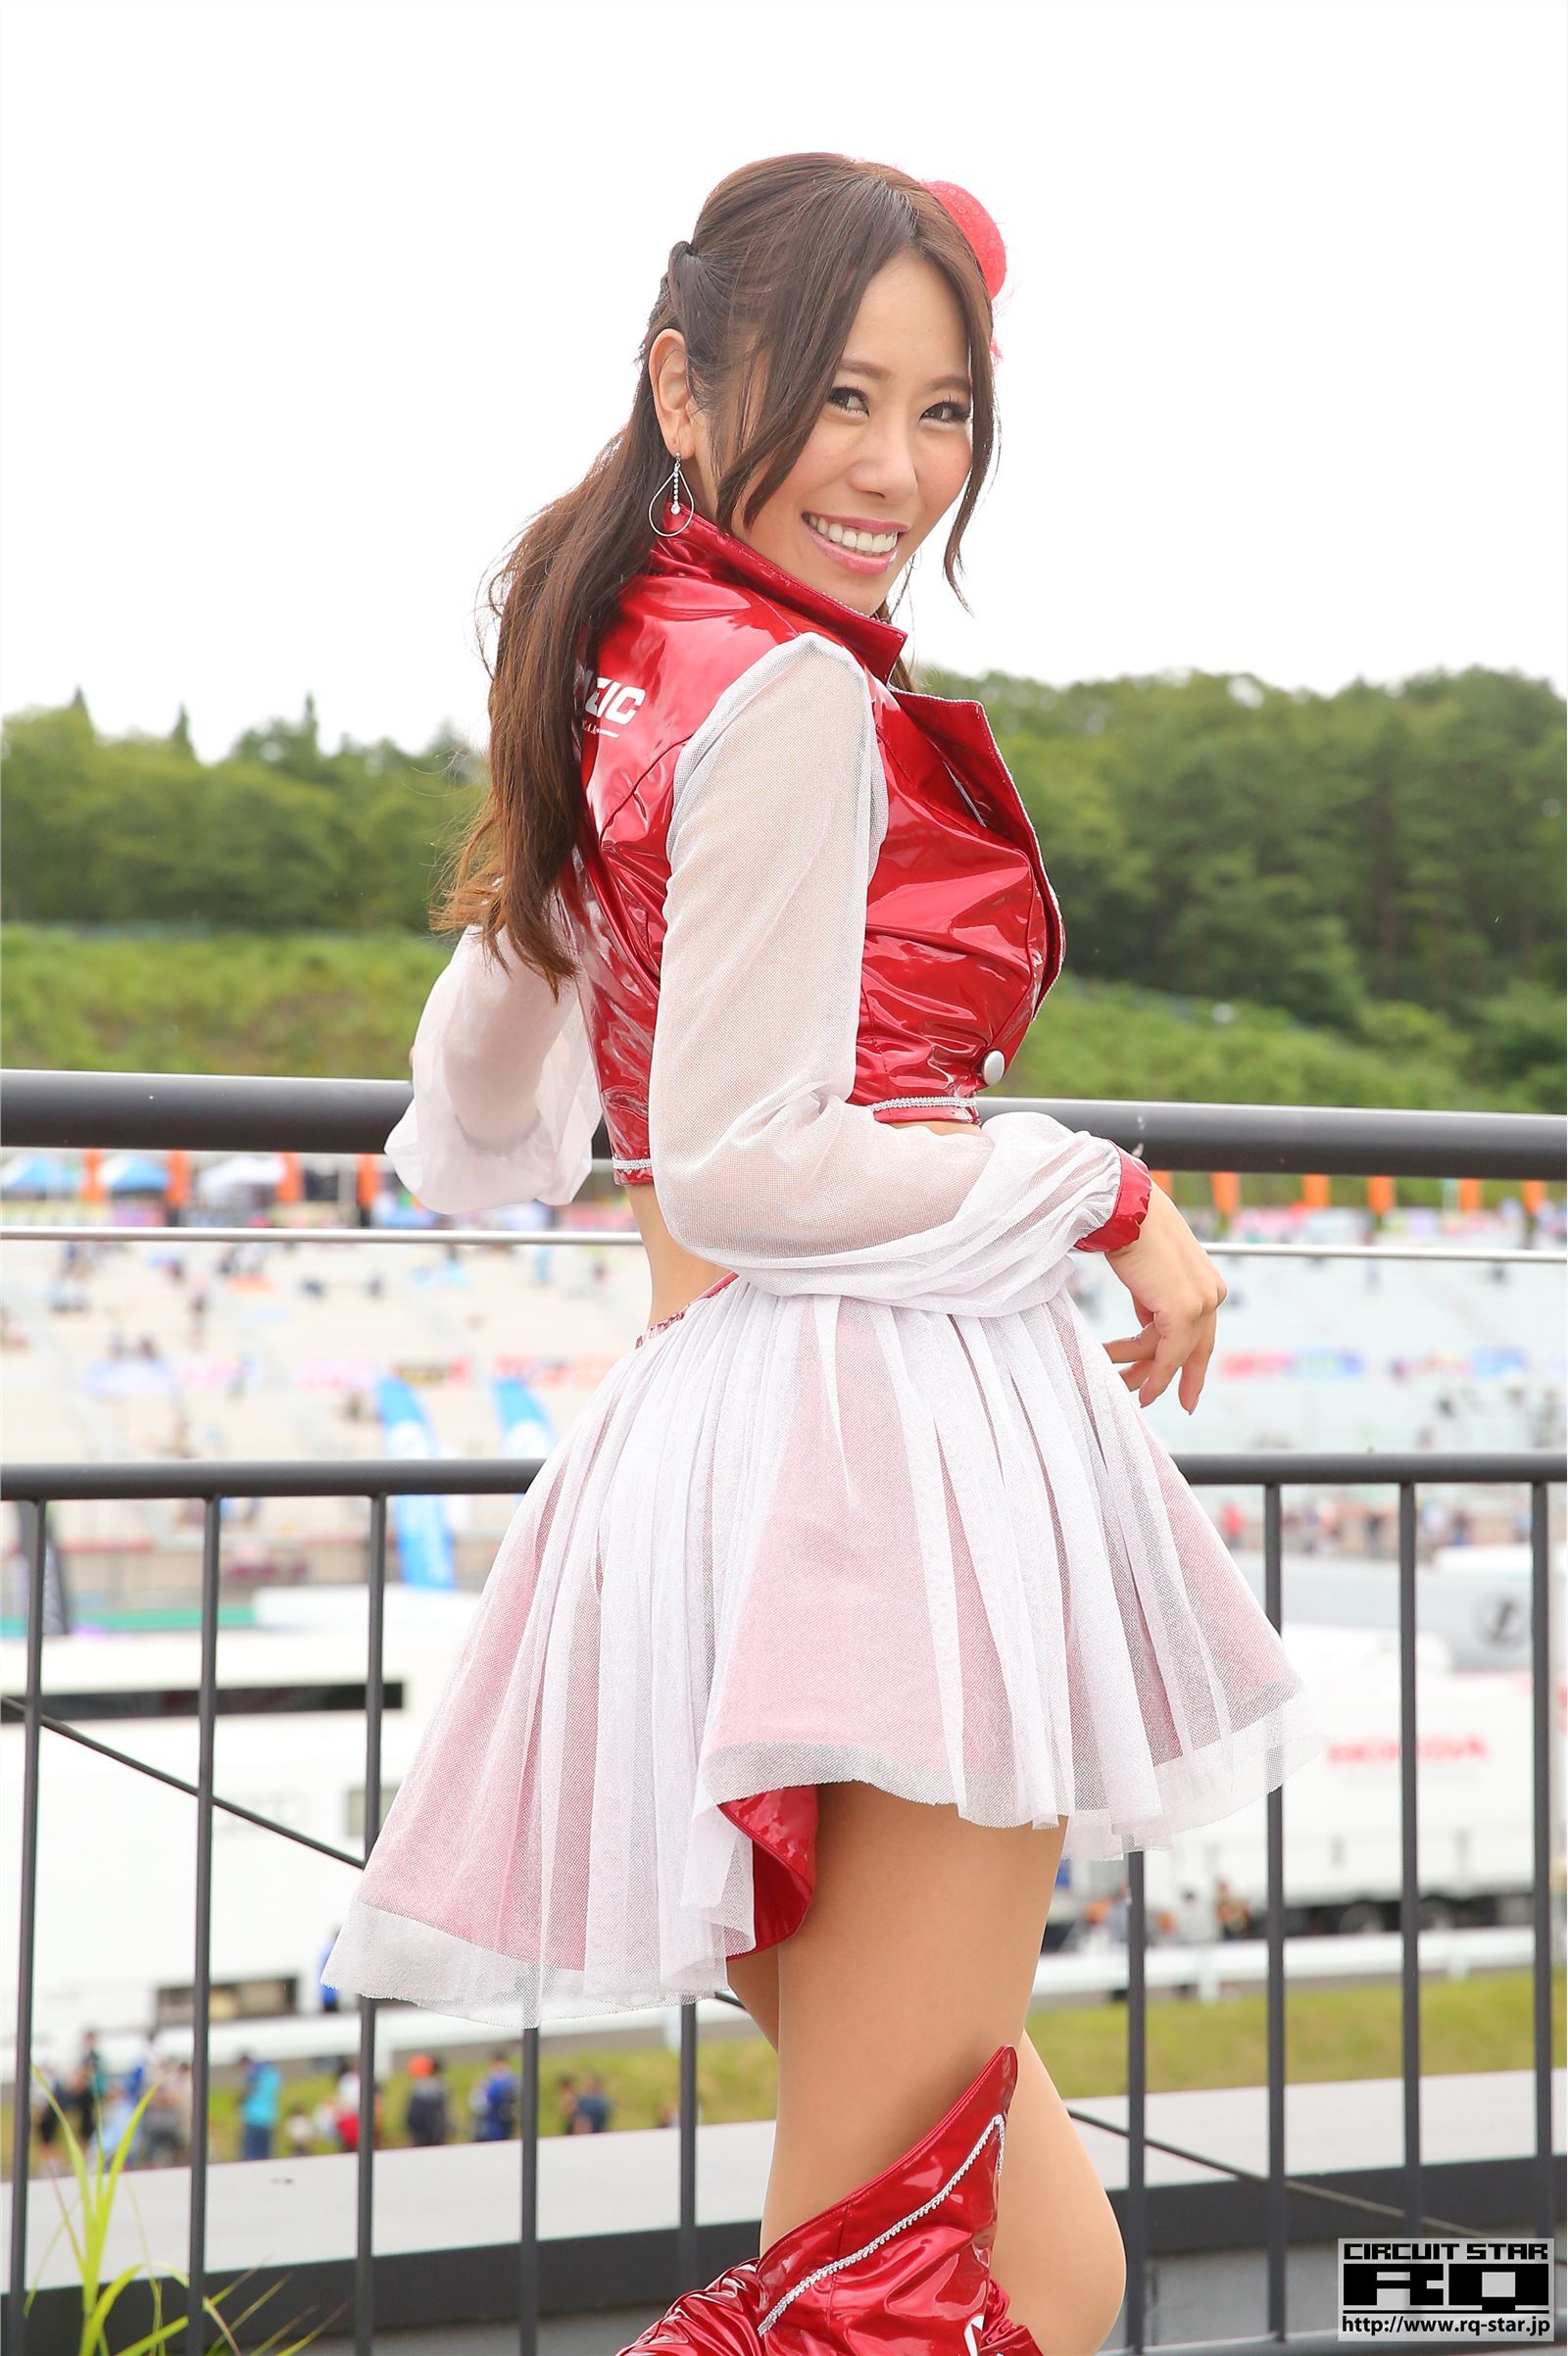 [rq-star] May 11, 2018 Akane watase race queen